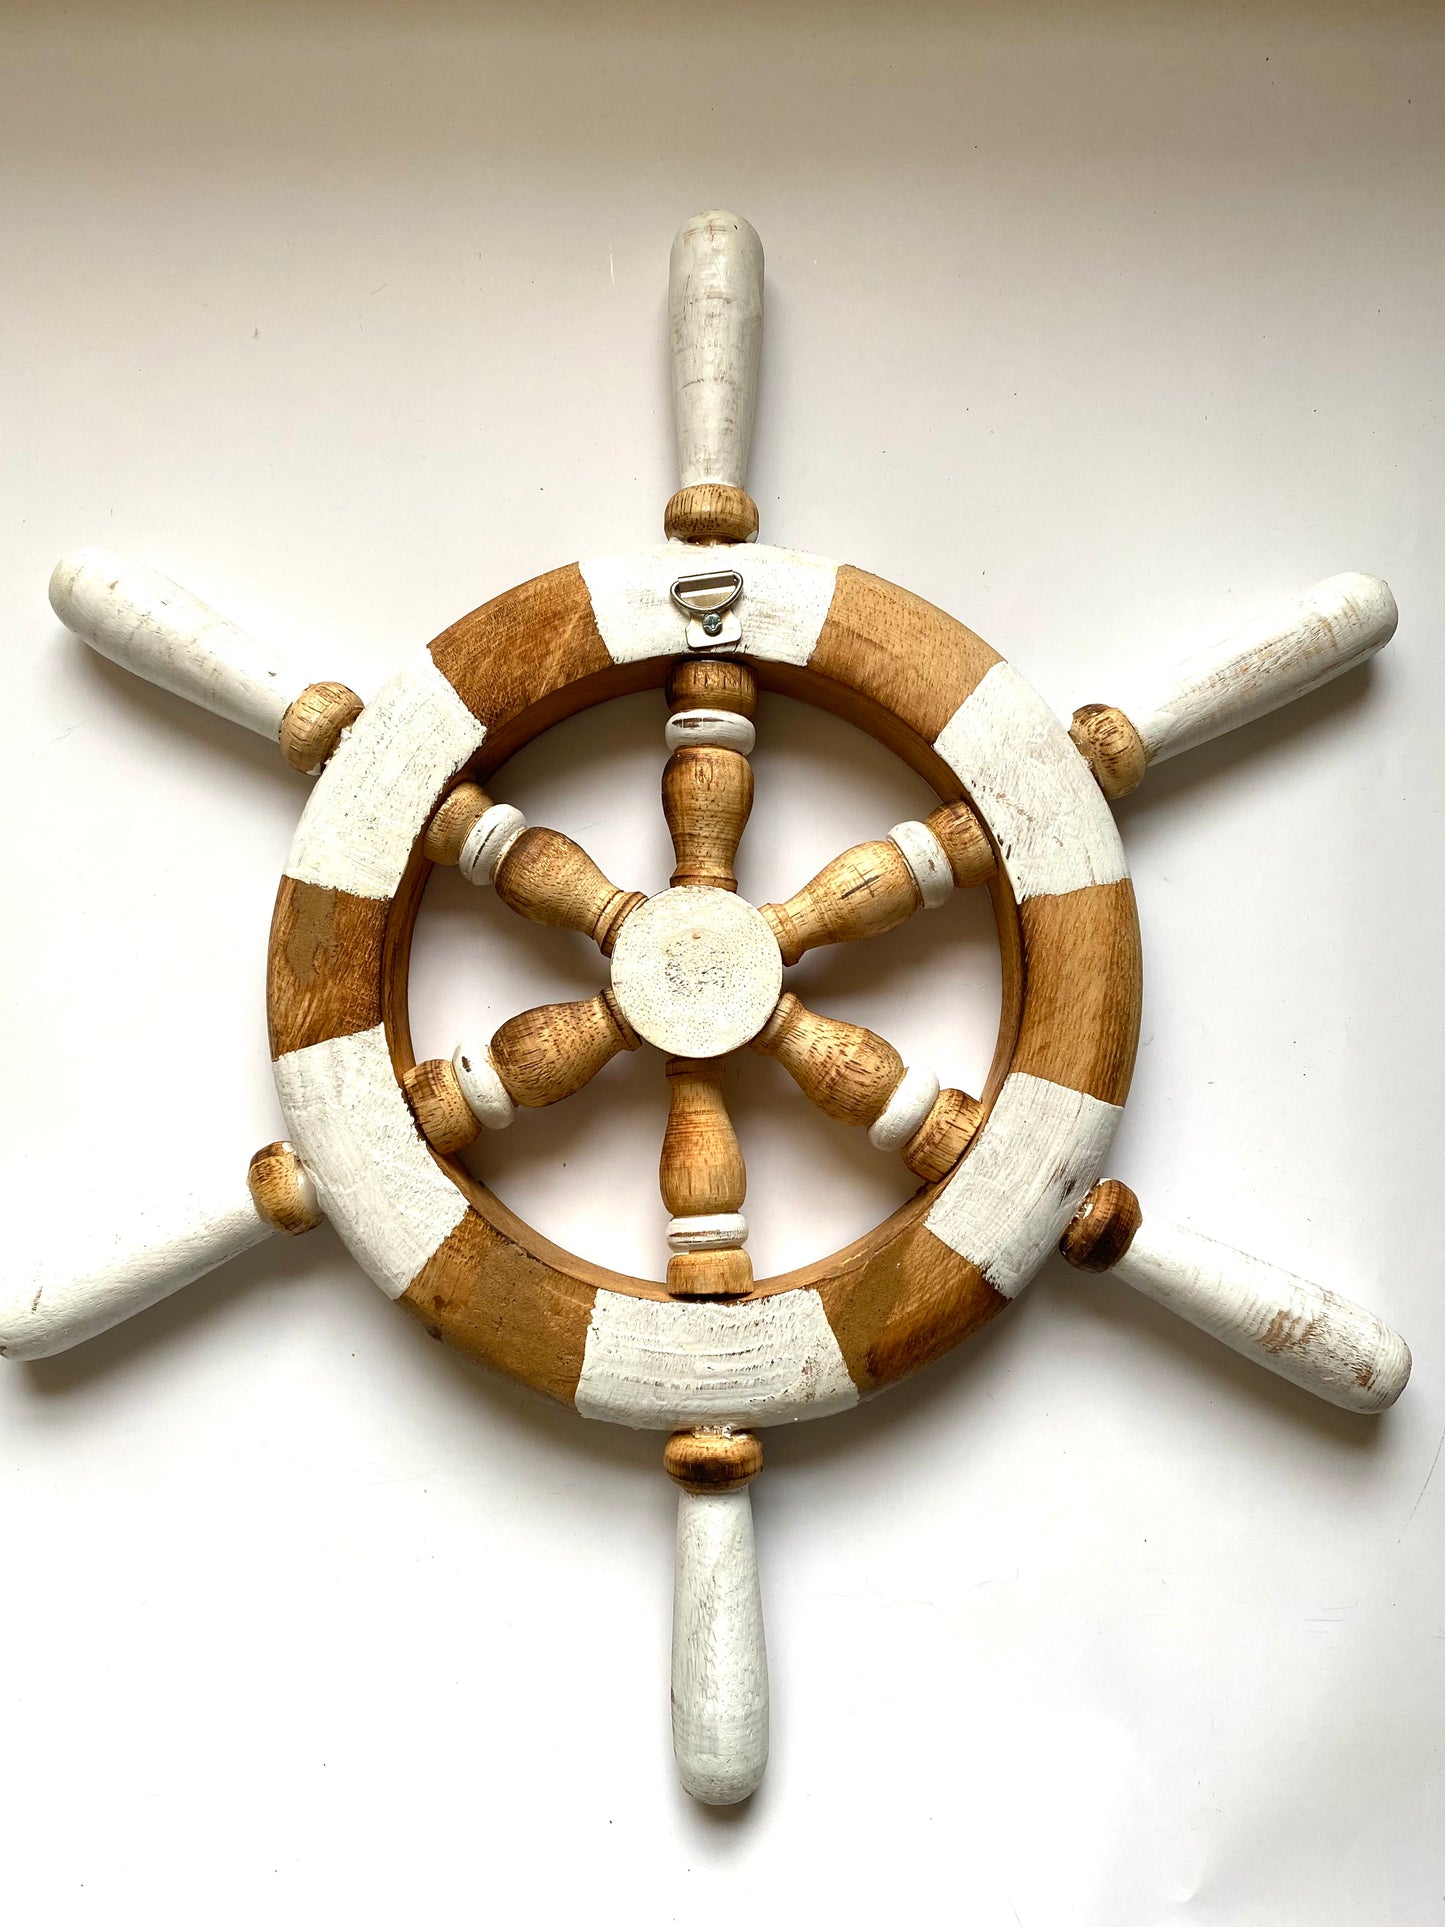 Rustic wooden Ships Wheel